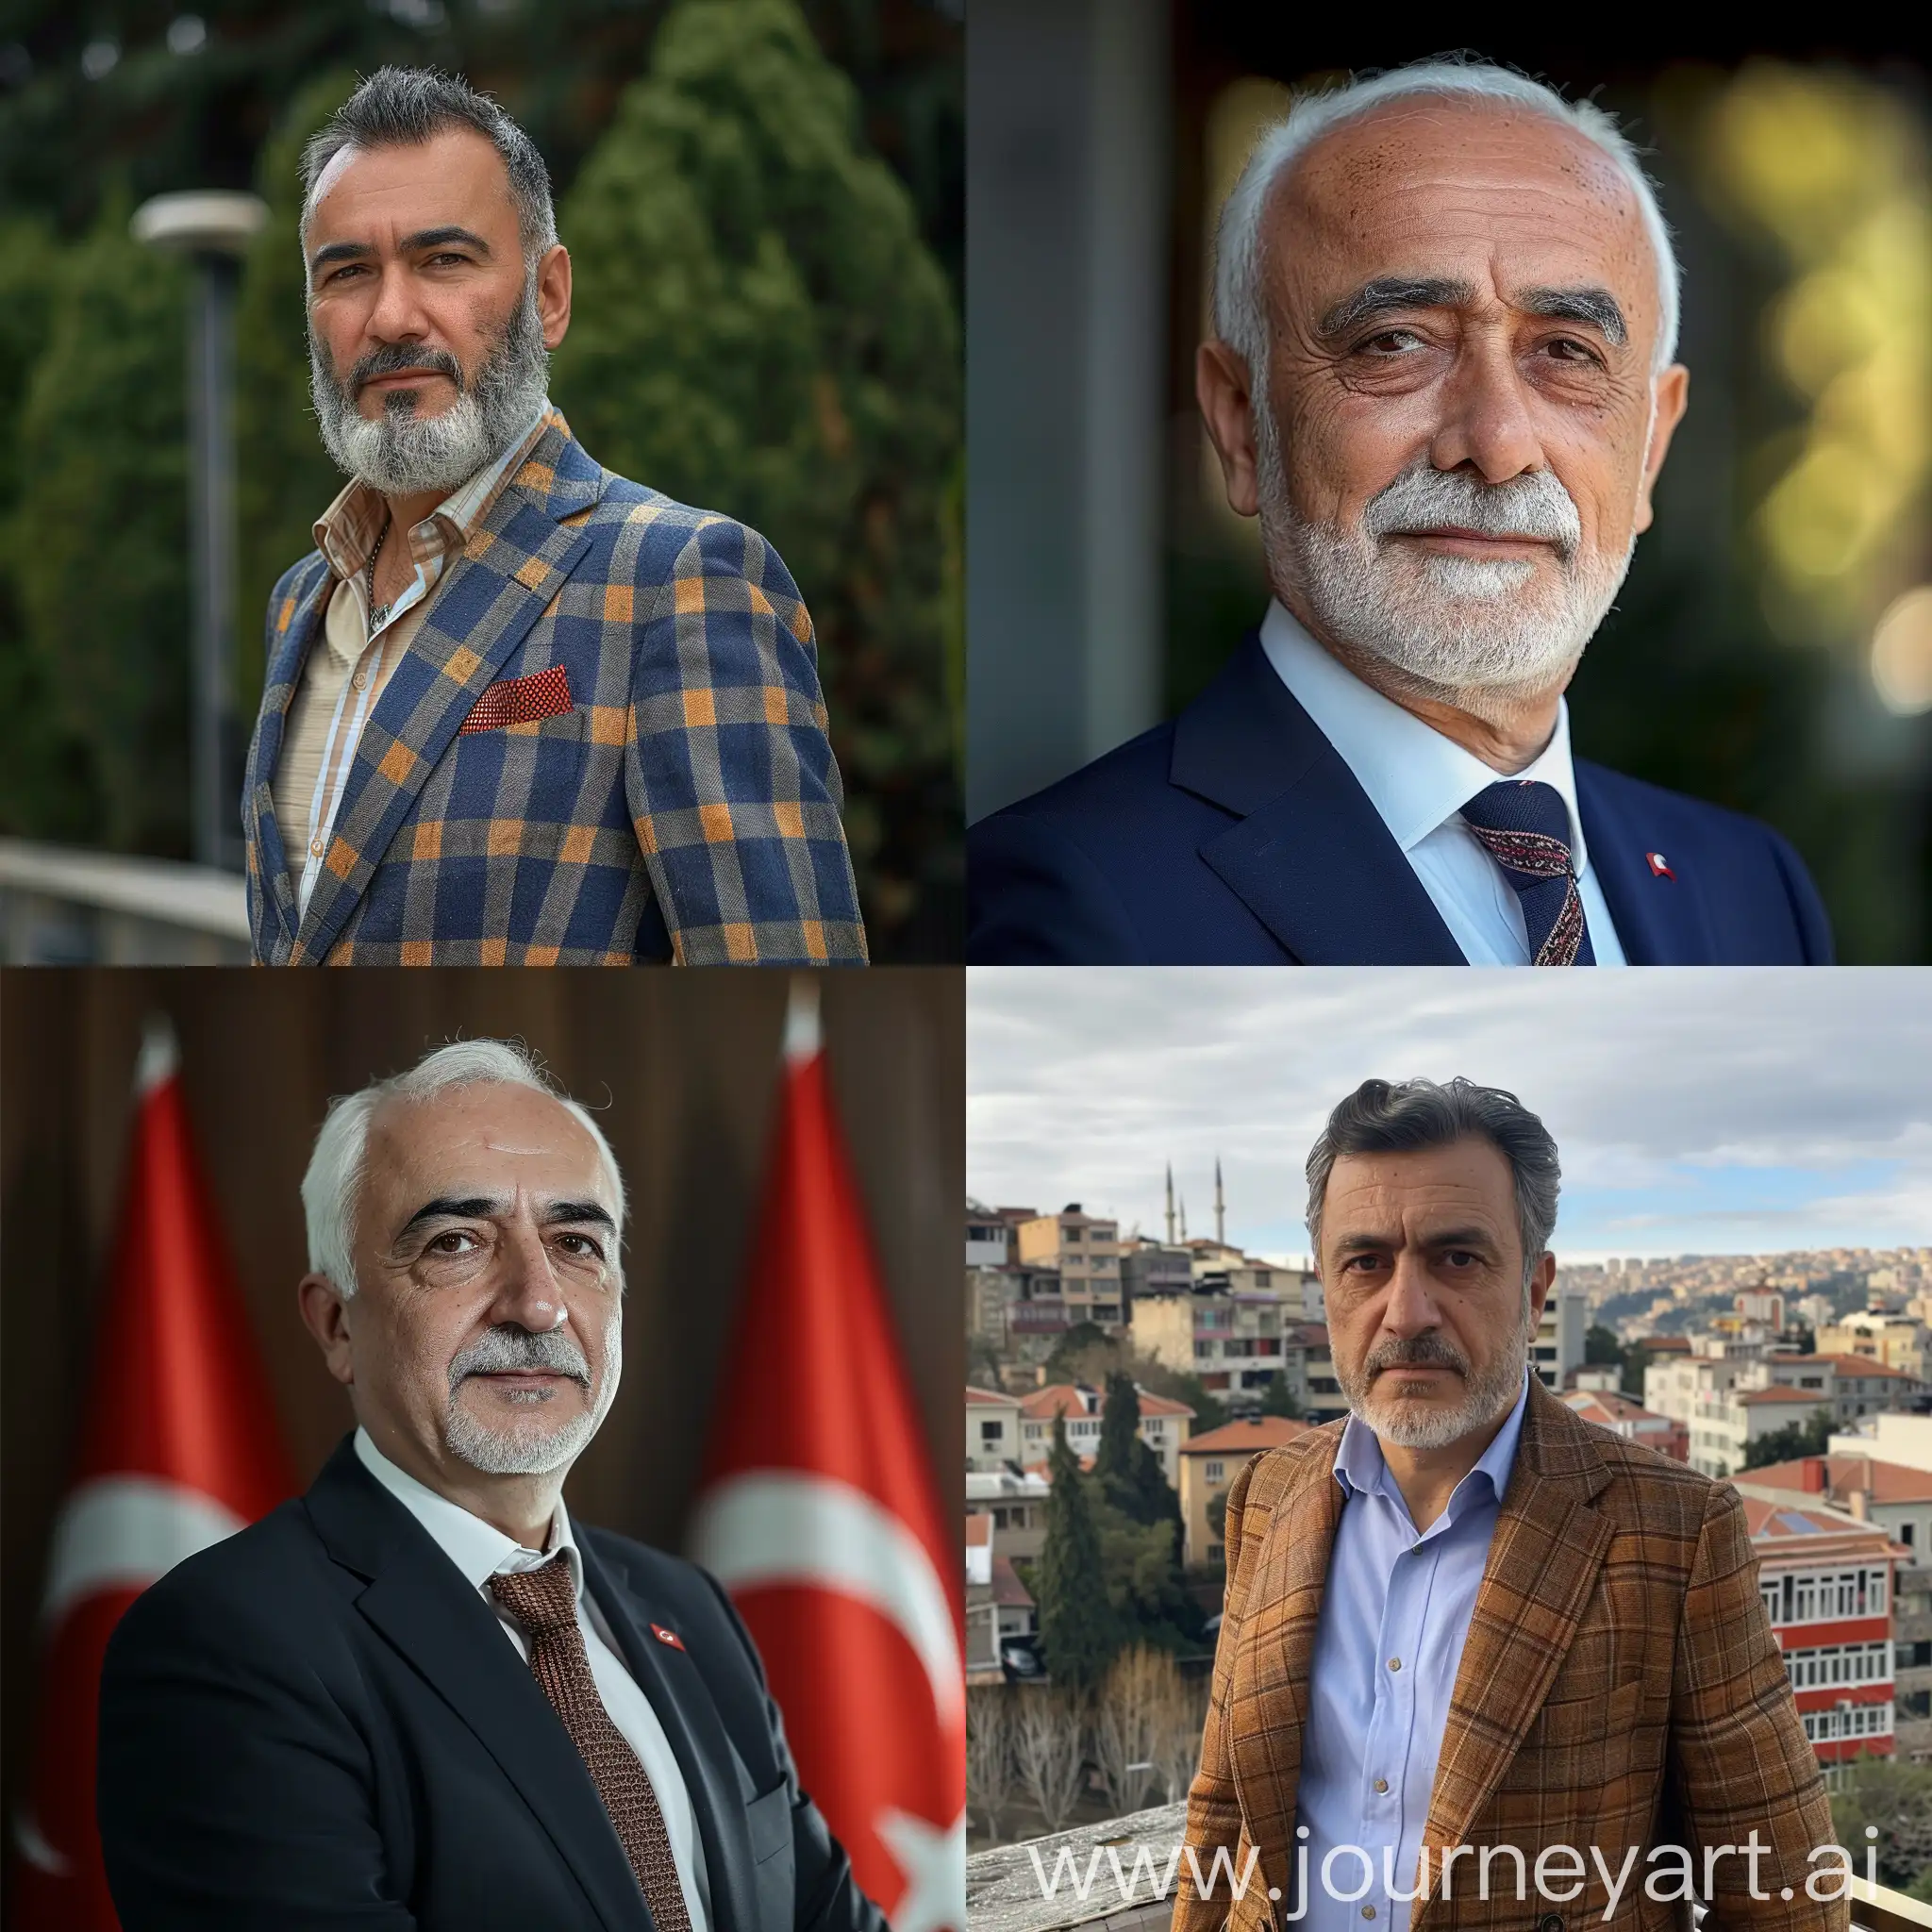 Saruman-2024-Mayor-Candidate-Portrait-Turkish-Election-Campaign